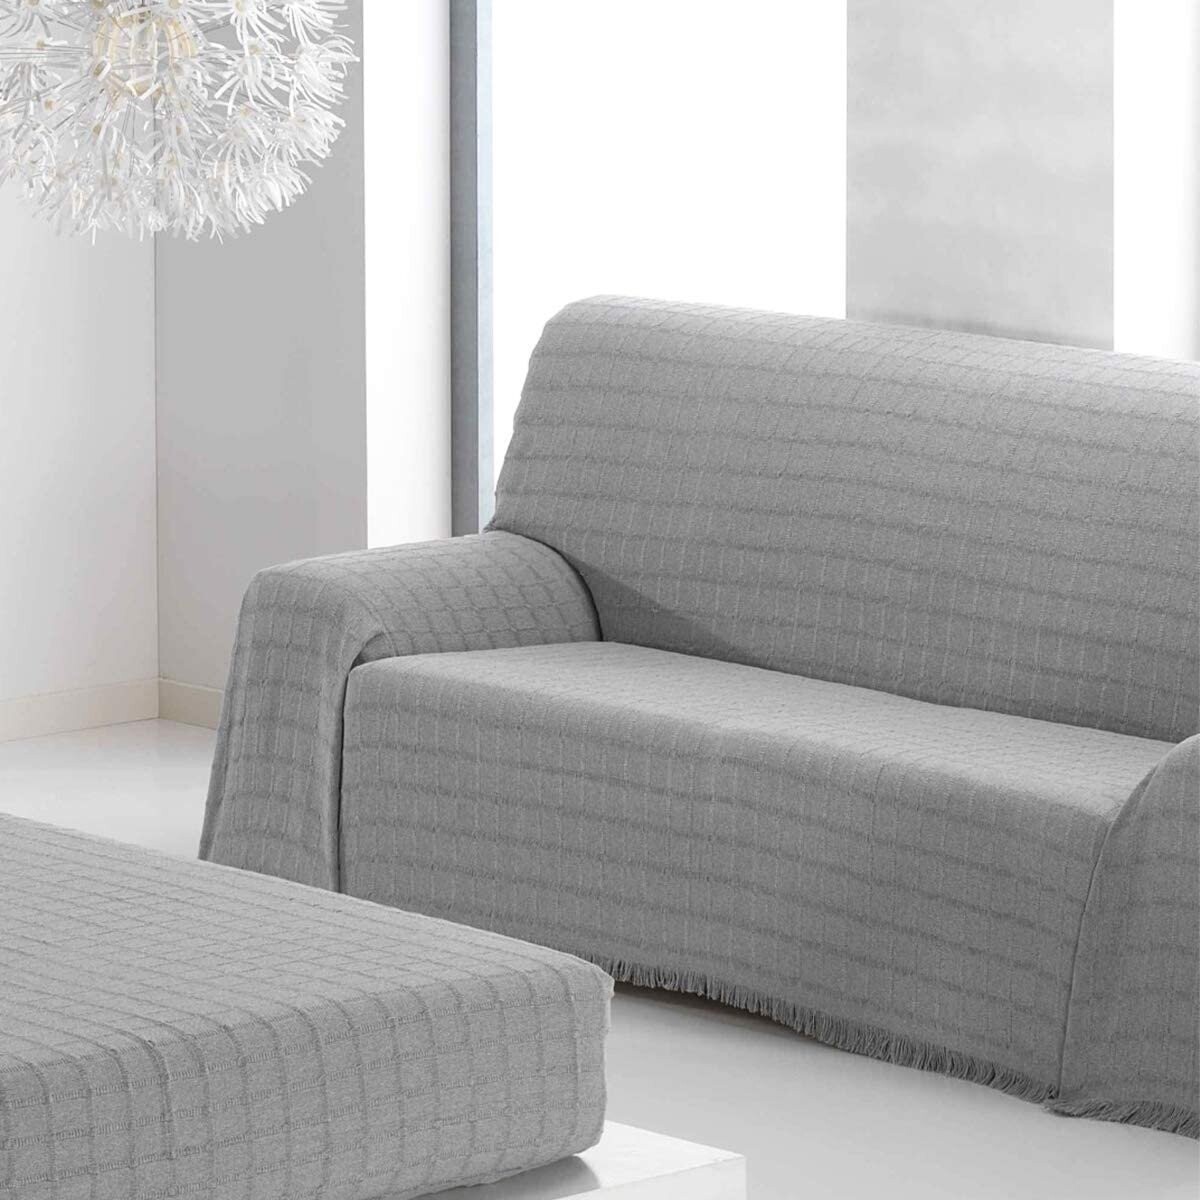 Cubre sofá Multiusos, jarapas algodón Espiga tejido: 80% Algodón, 20% Poliéster Fabricado en España Tono Gris perla.